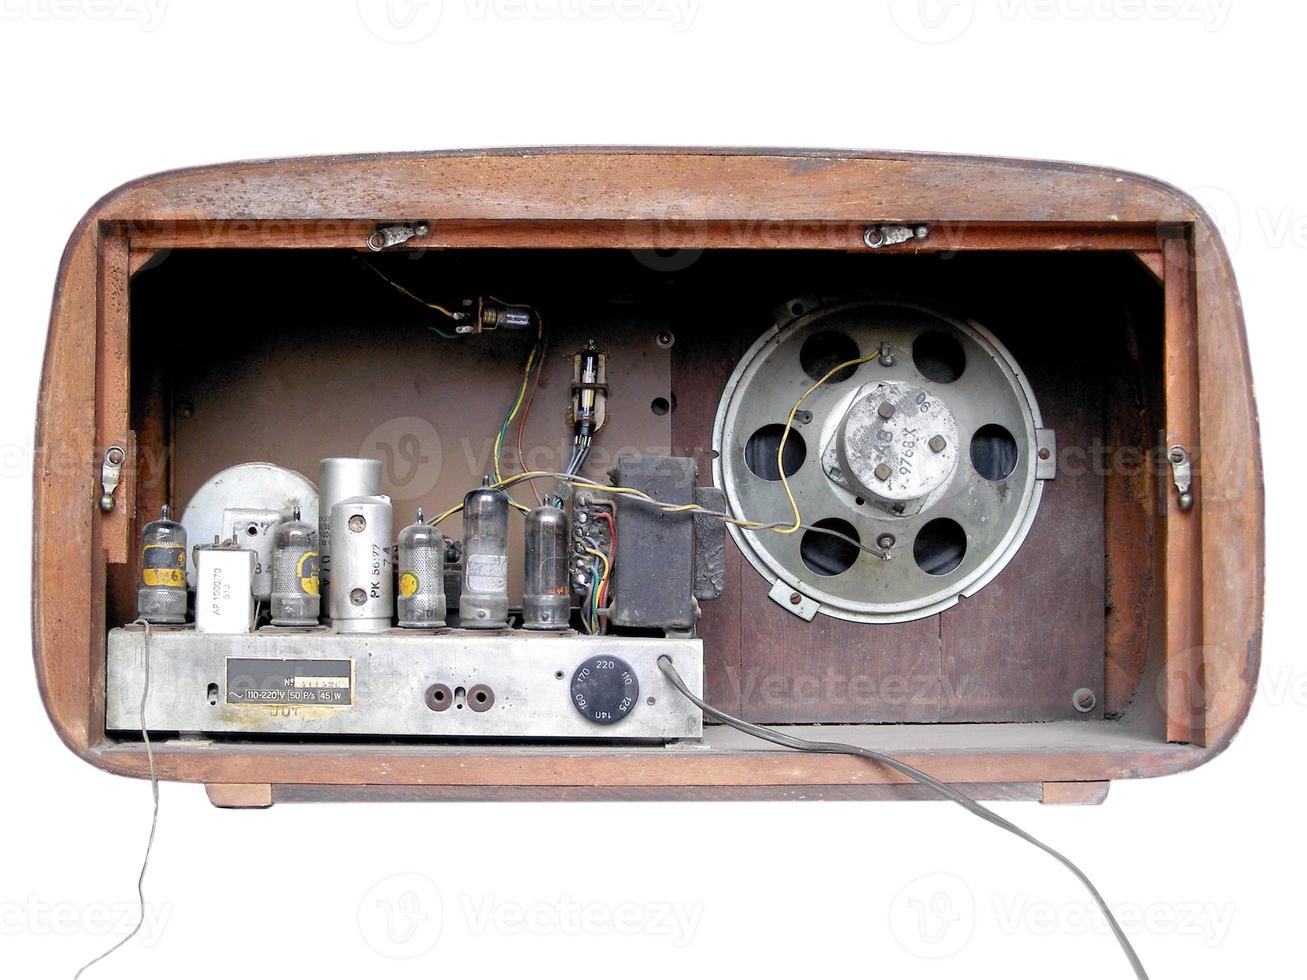 Old AM radio tuner photo